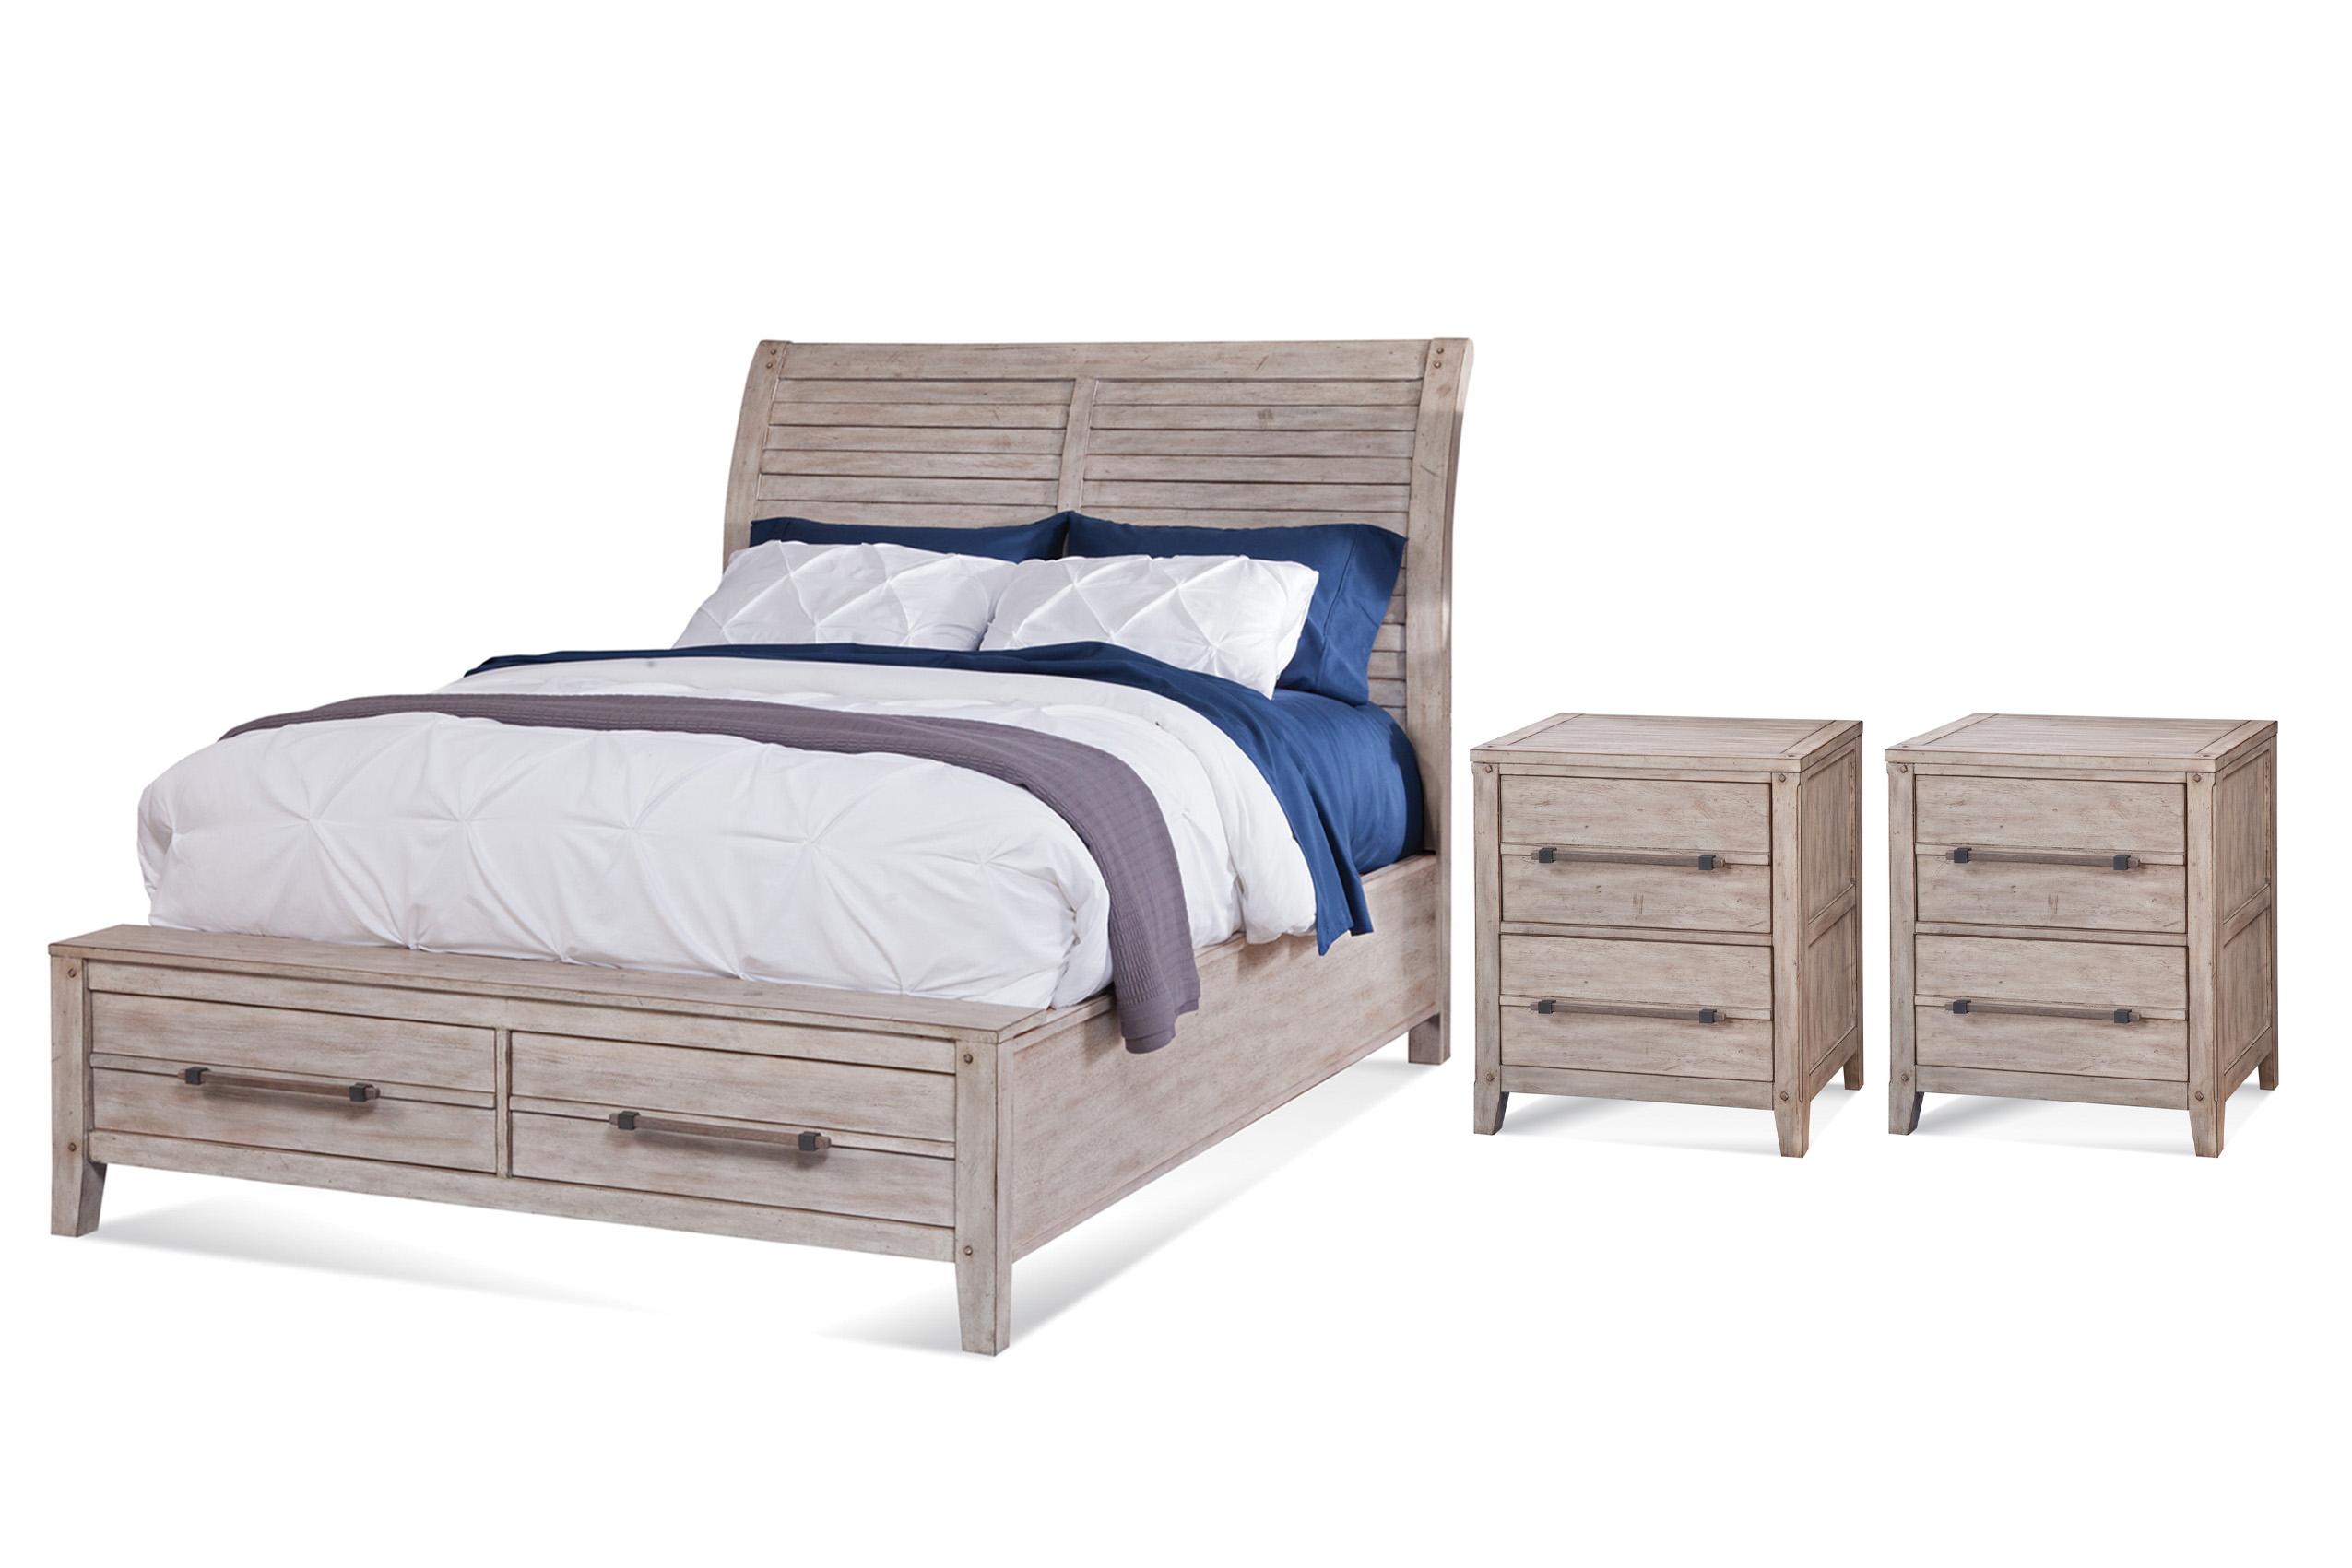 Classic, Traditional Sleigh Bedroom Set AURORA 2810-66PSB 2810-66PSB-2810-420-2N-3PC in whitewash 